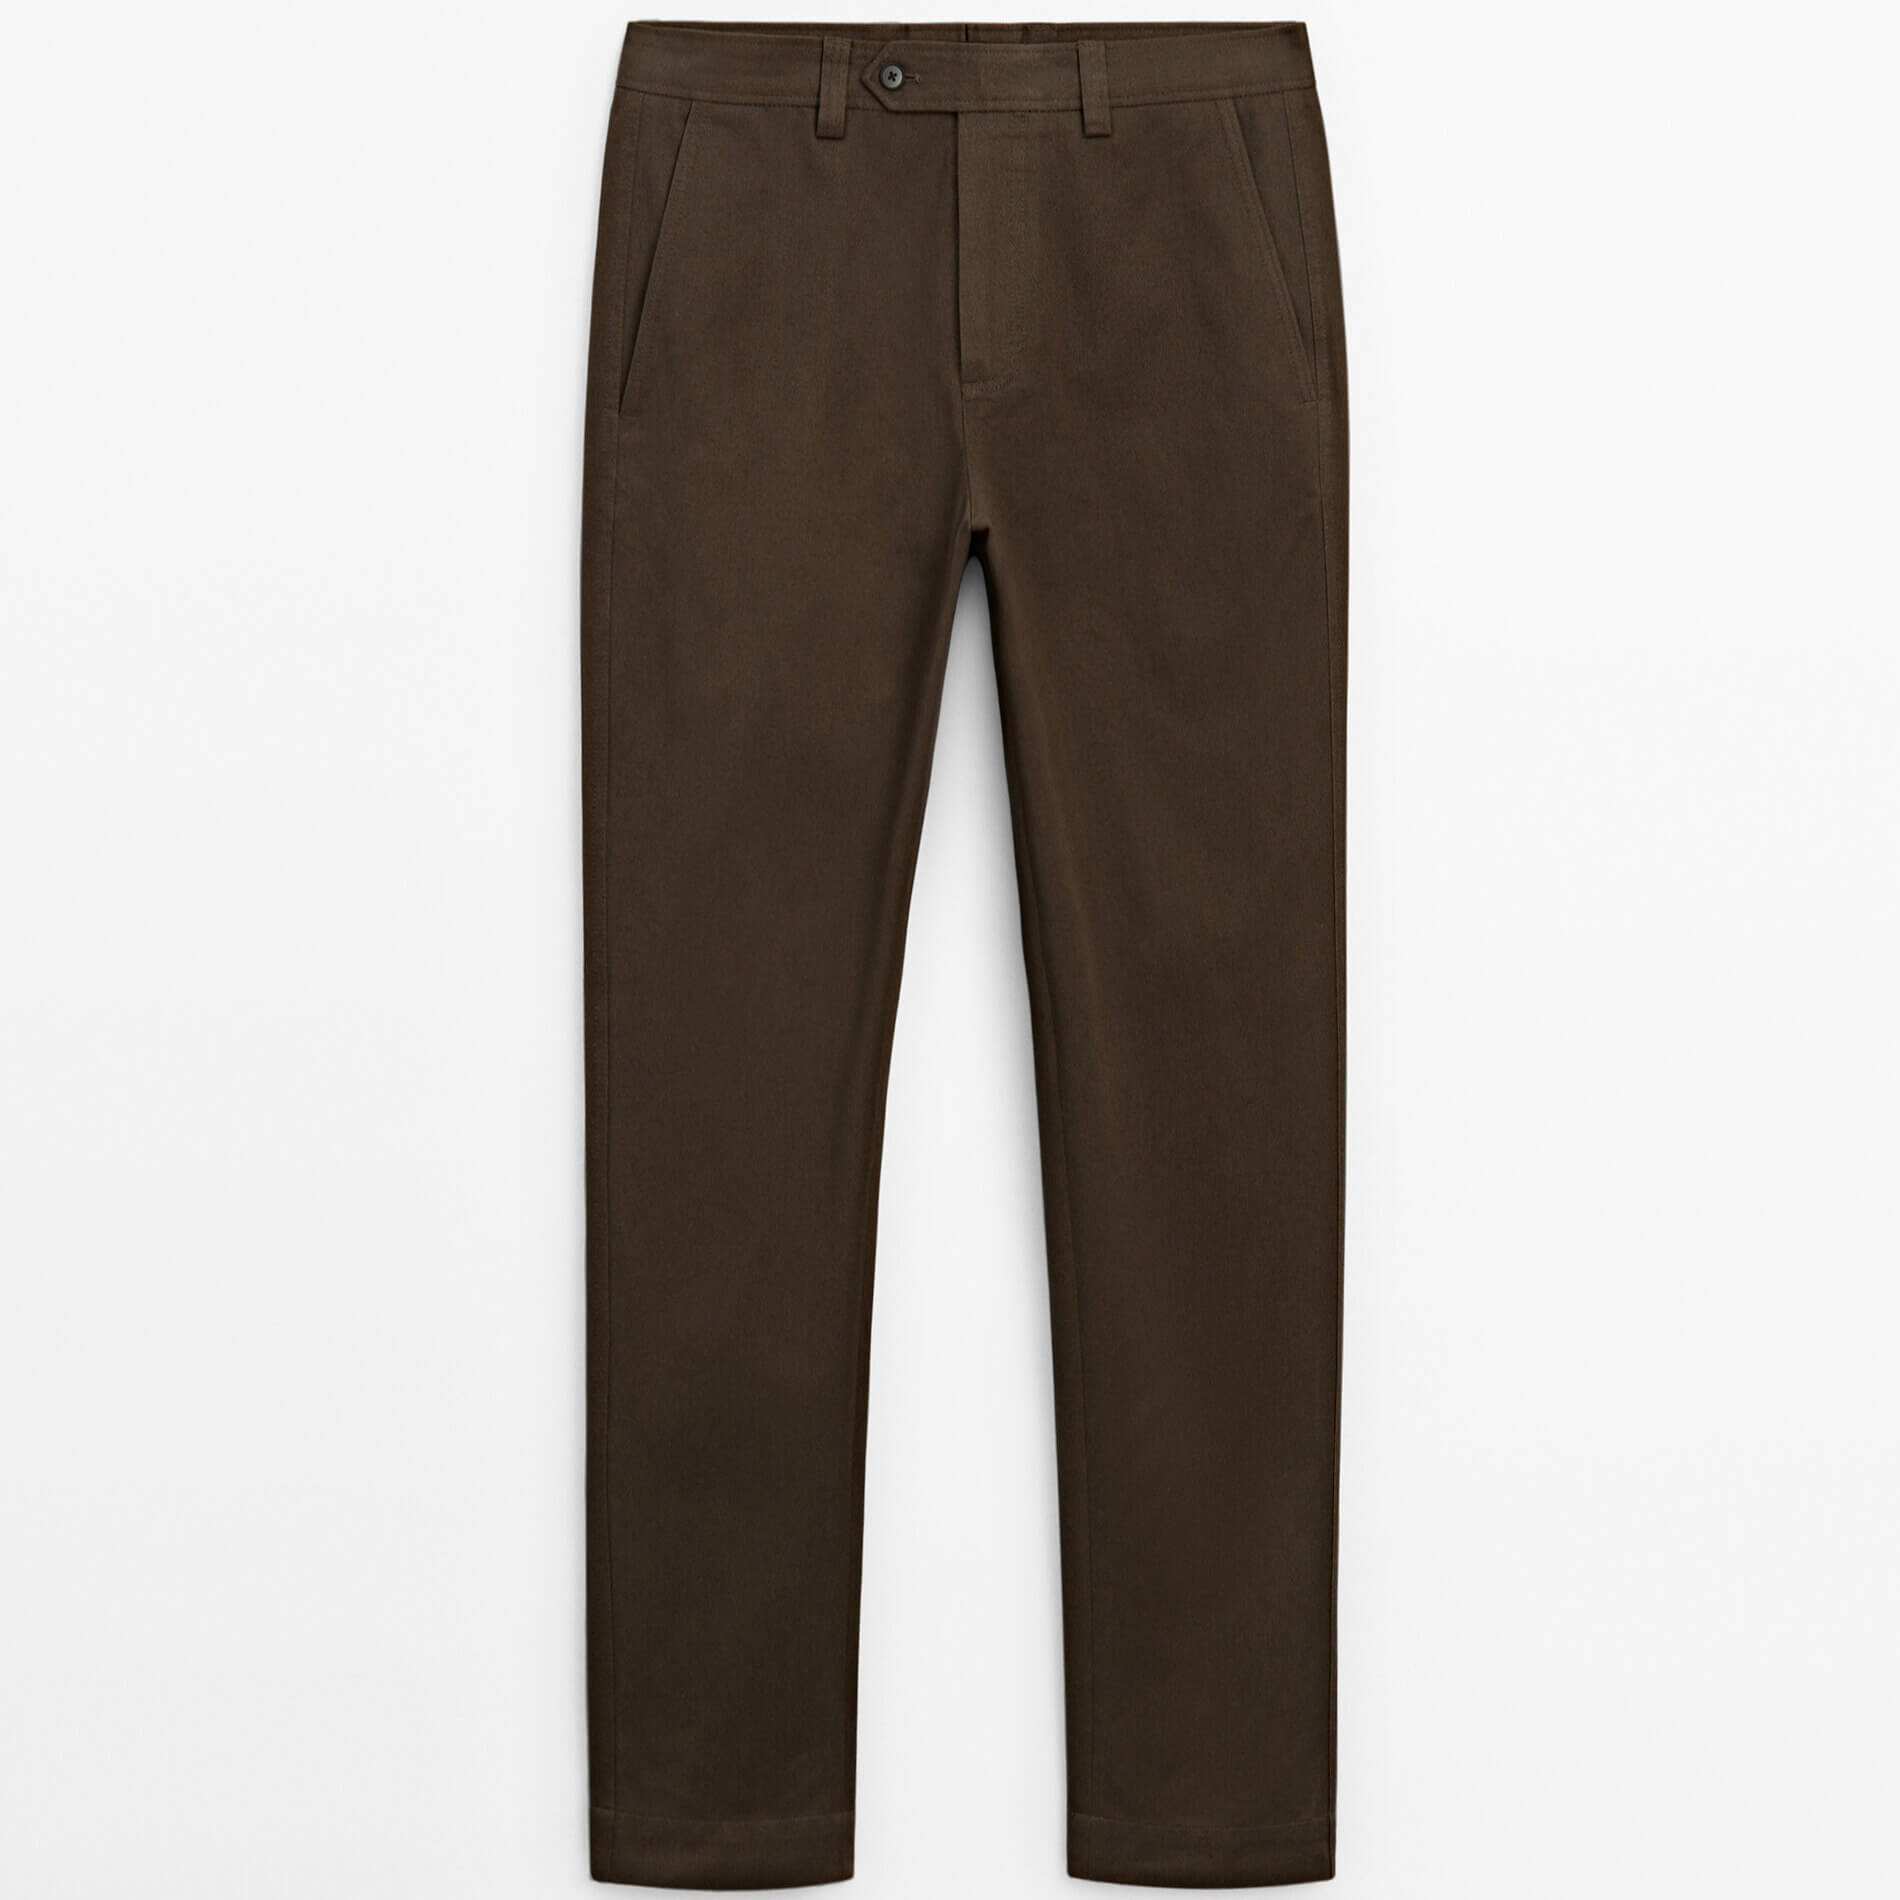 Брюки Massimo Dutti Cotton Wide Fit Studio, коричневый брюки massimo dutti wide leg cotton blend studio коричневый